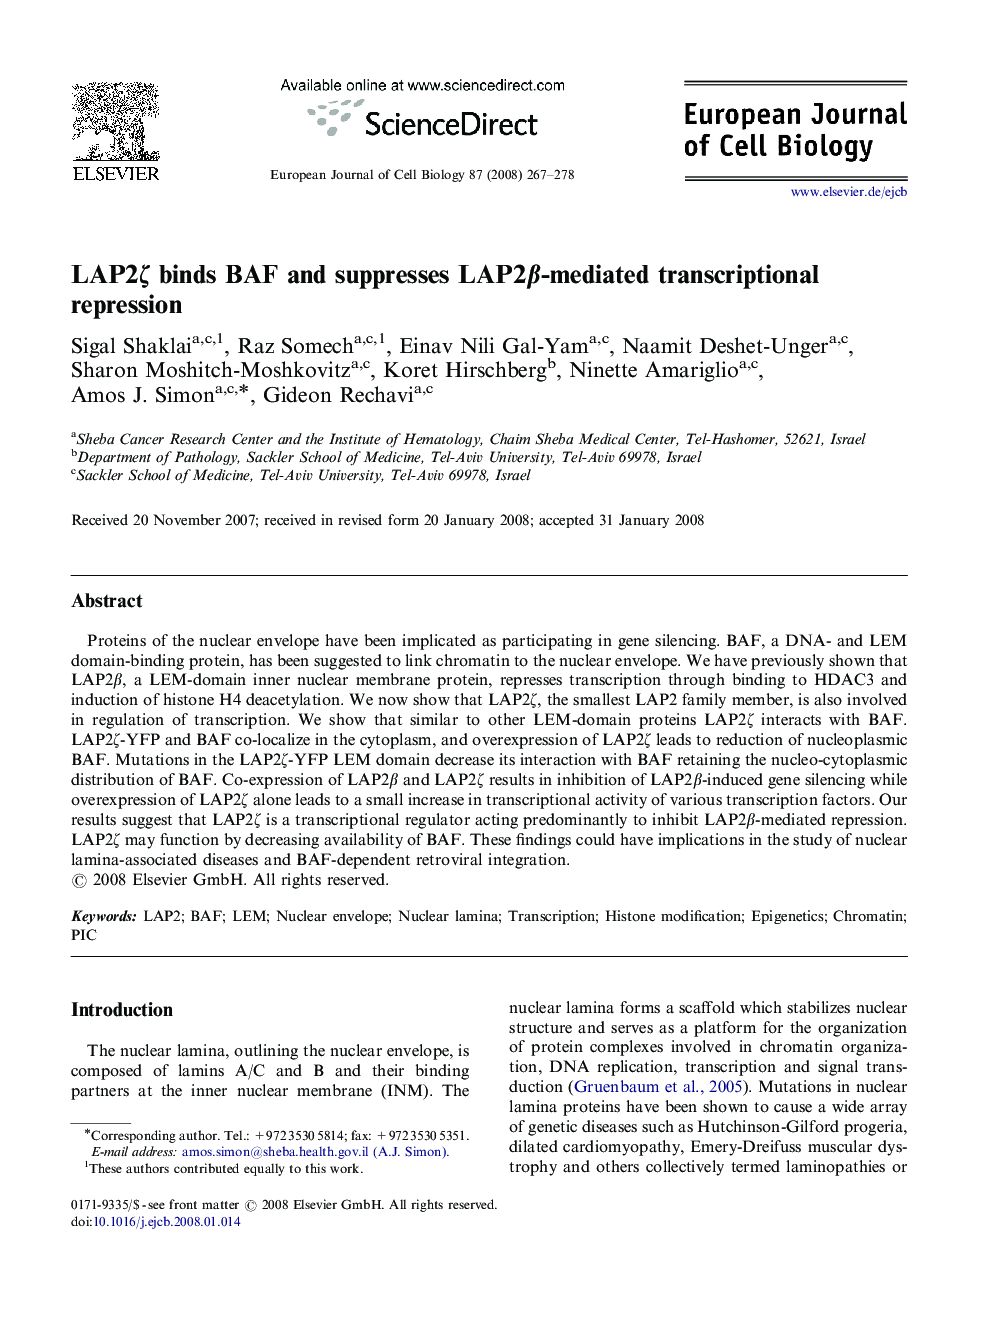 LAP2ζ binds BAF and suppresses LAP2β-mediated transcriptional repression